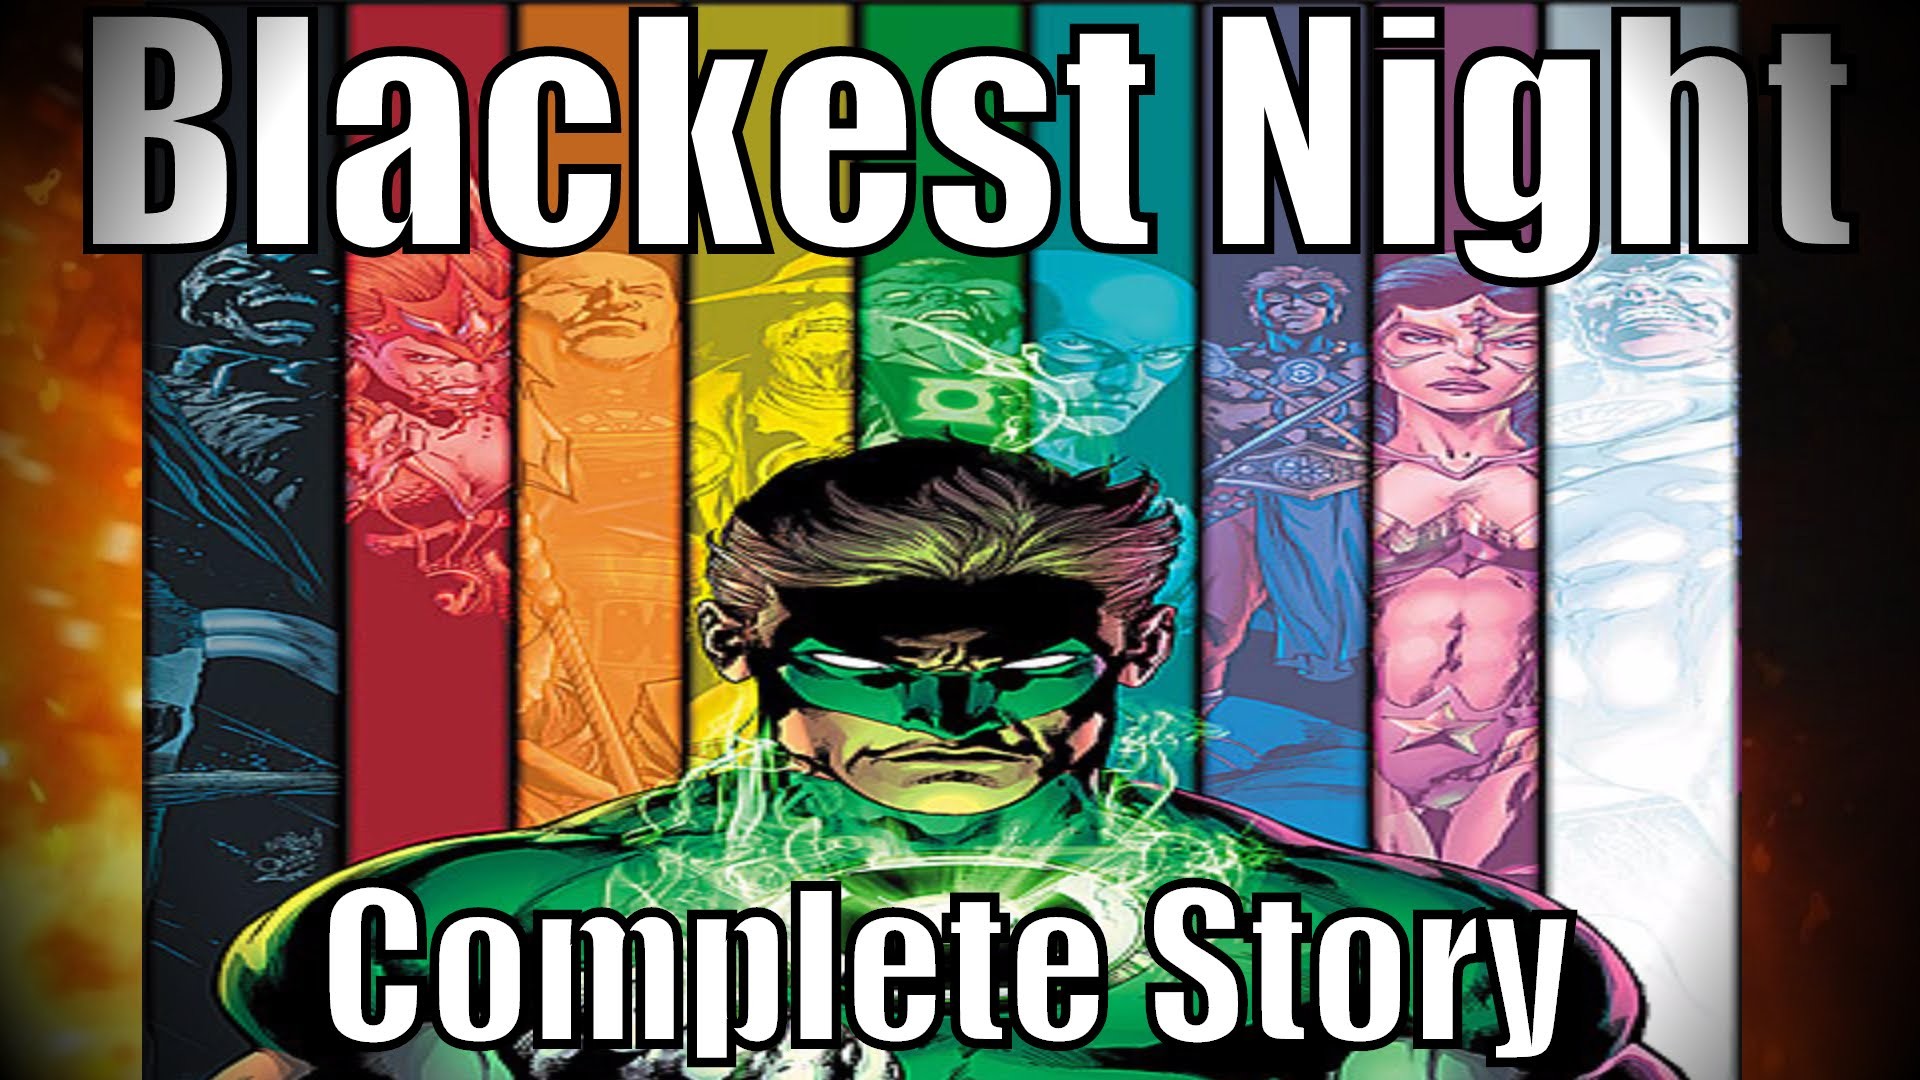 1920x1080 Blackest Night Complete Story